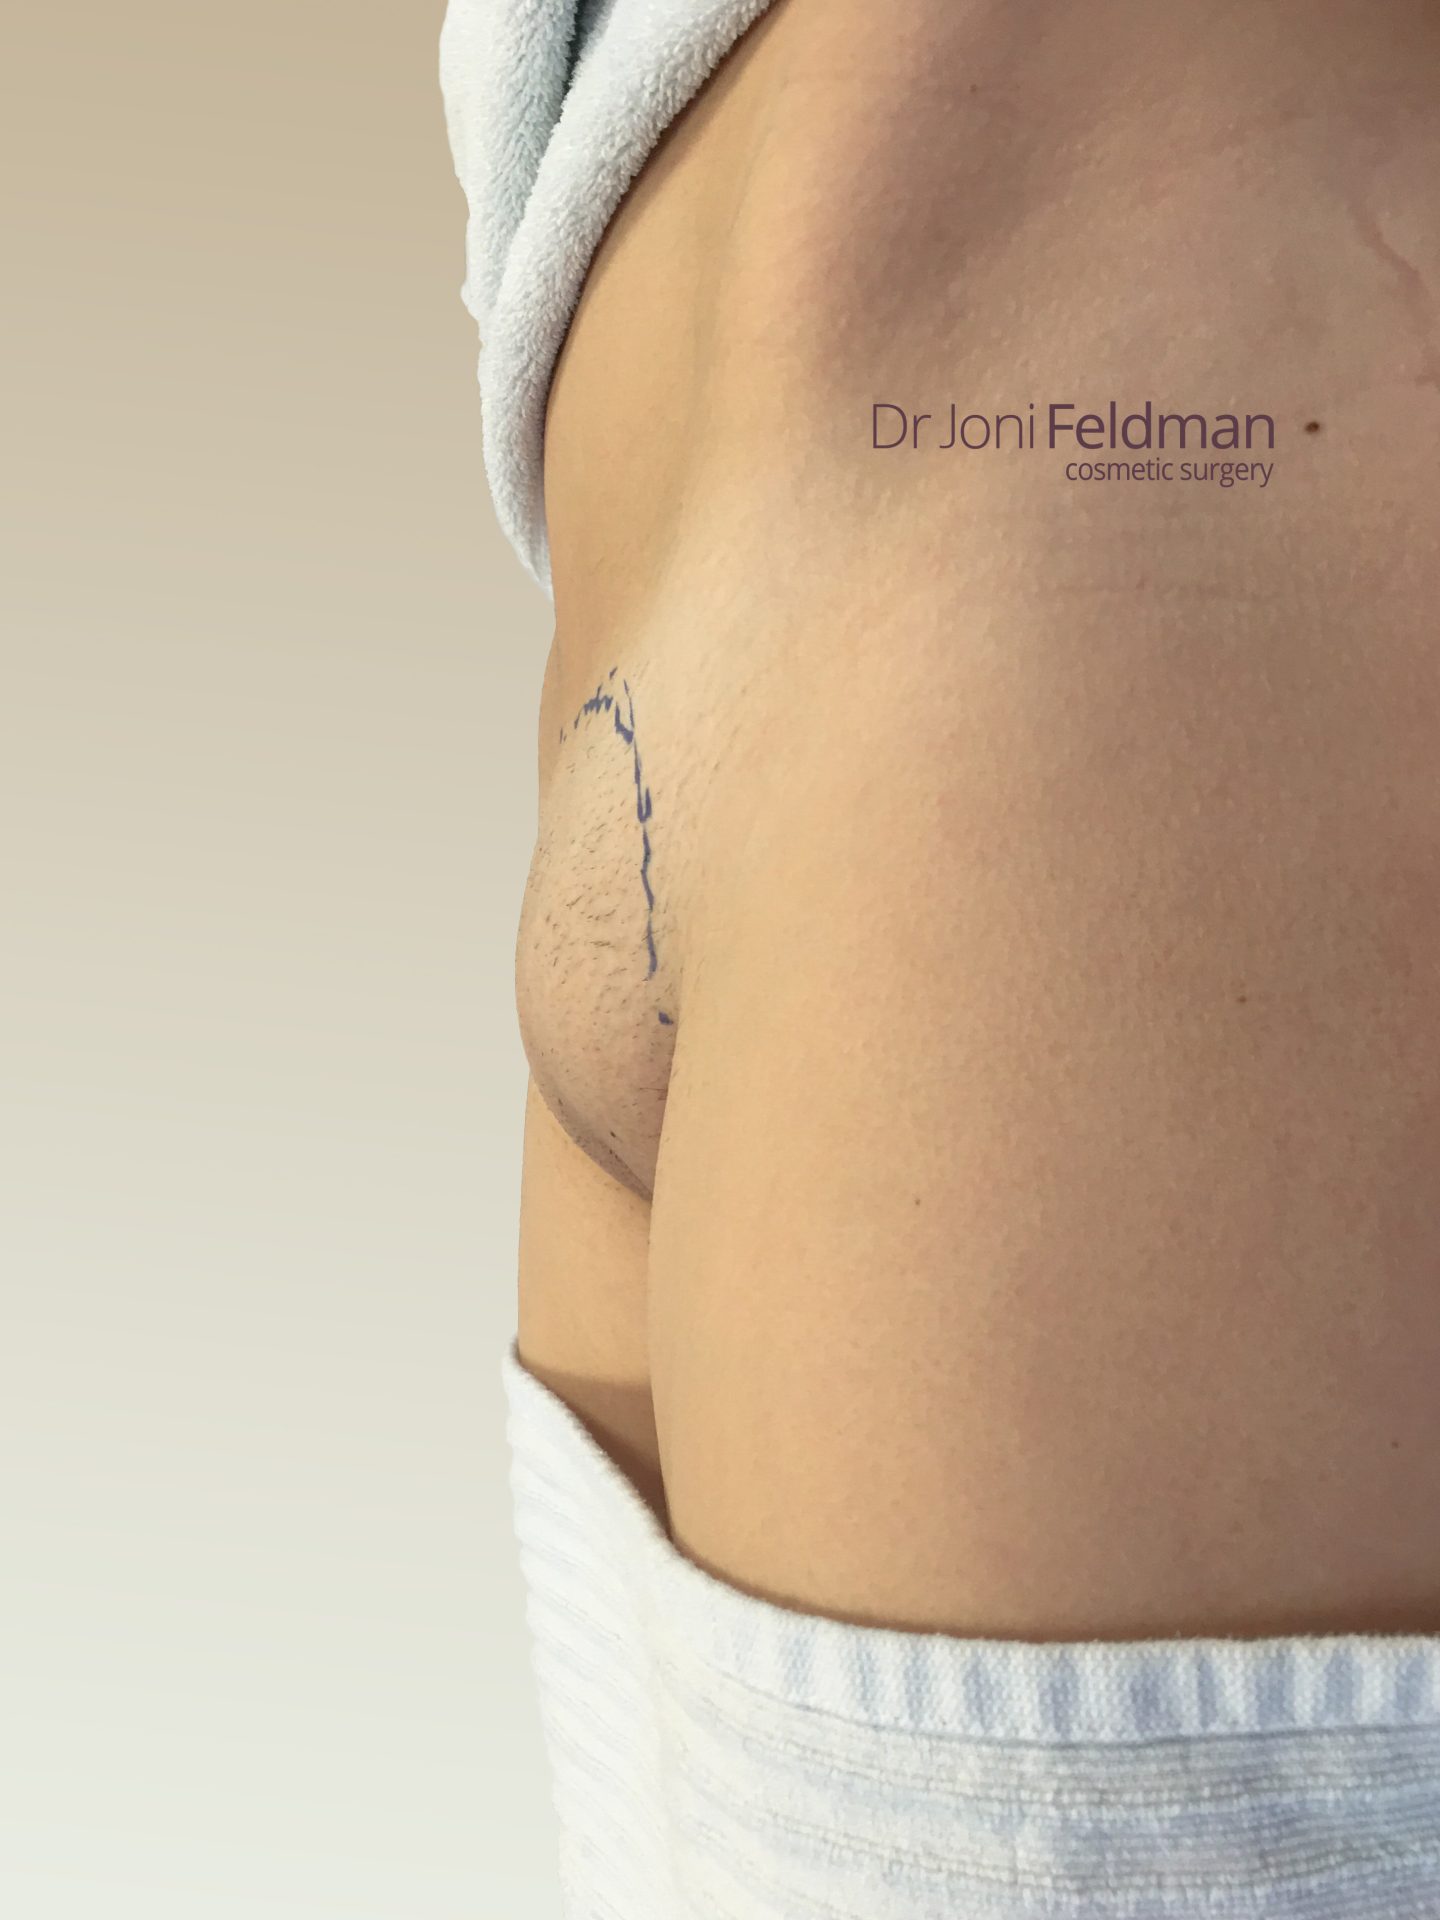 FUPA Mons pibis Liposuction - BEFORE -Dr Joni Feldman - Melbourne